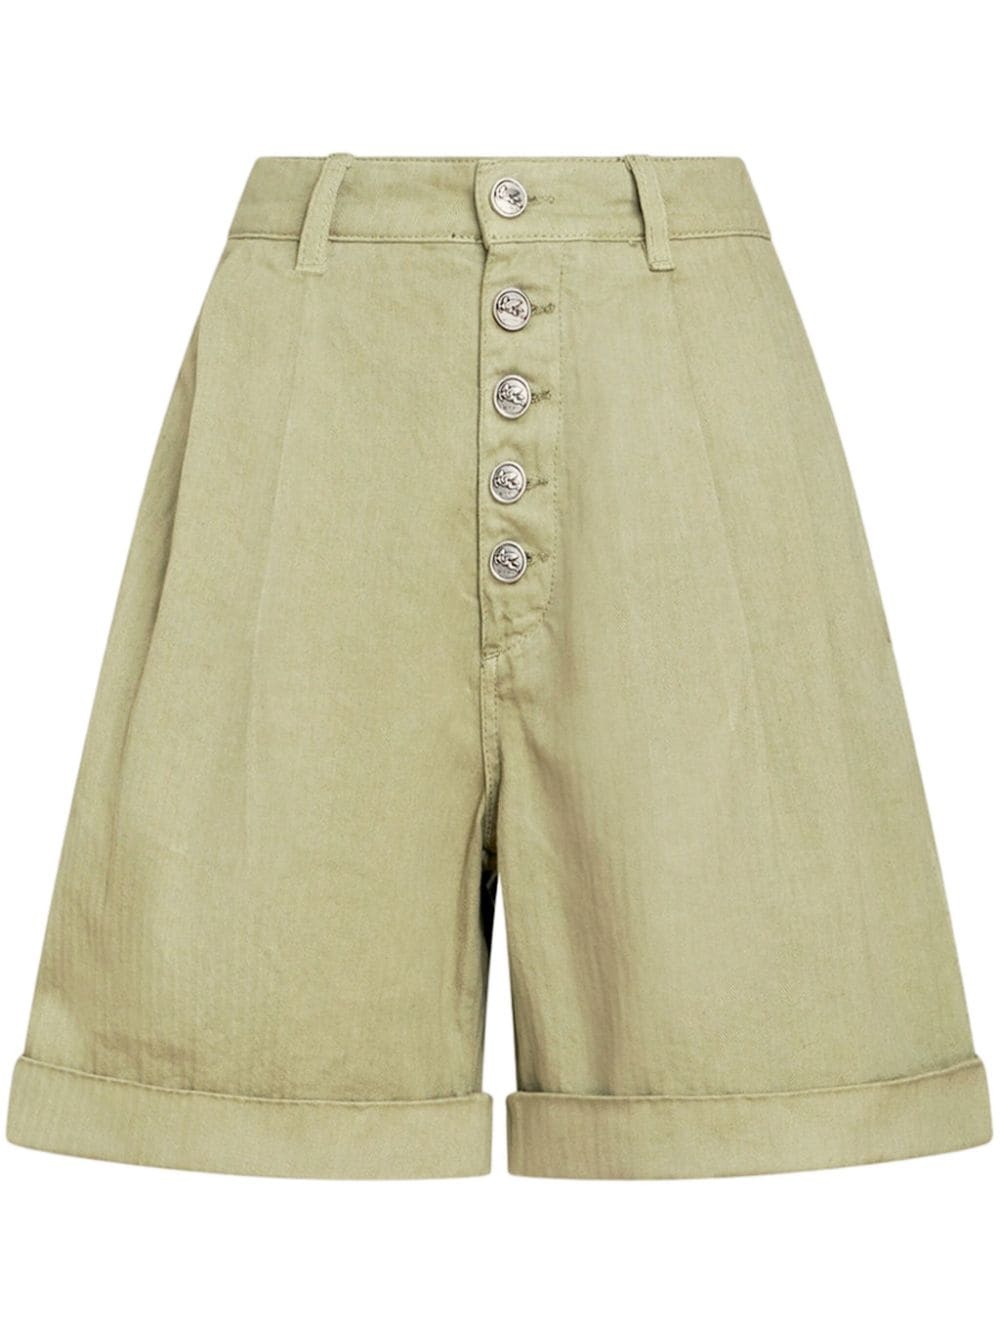 herringbone-pattern cotton bermuda shorts - 1